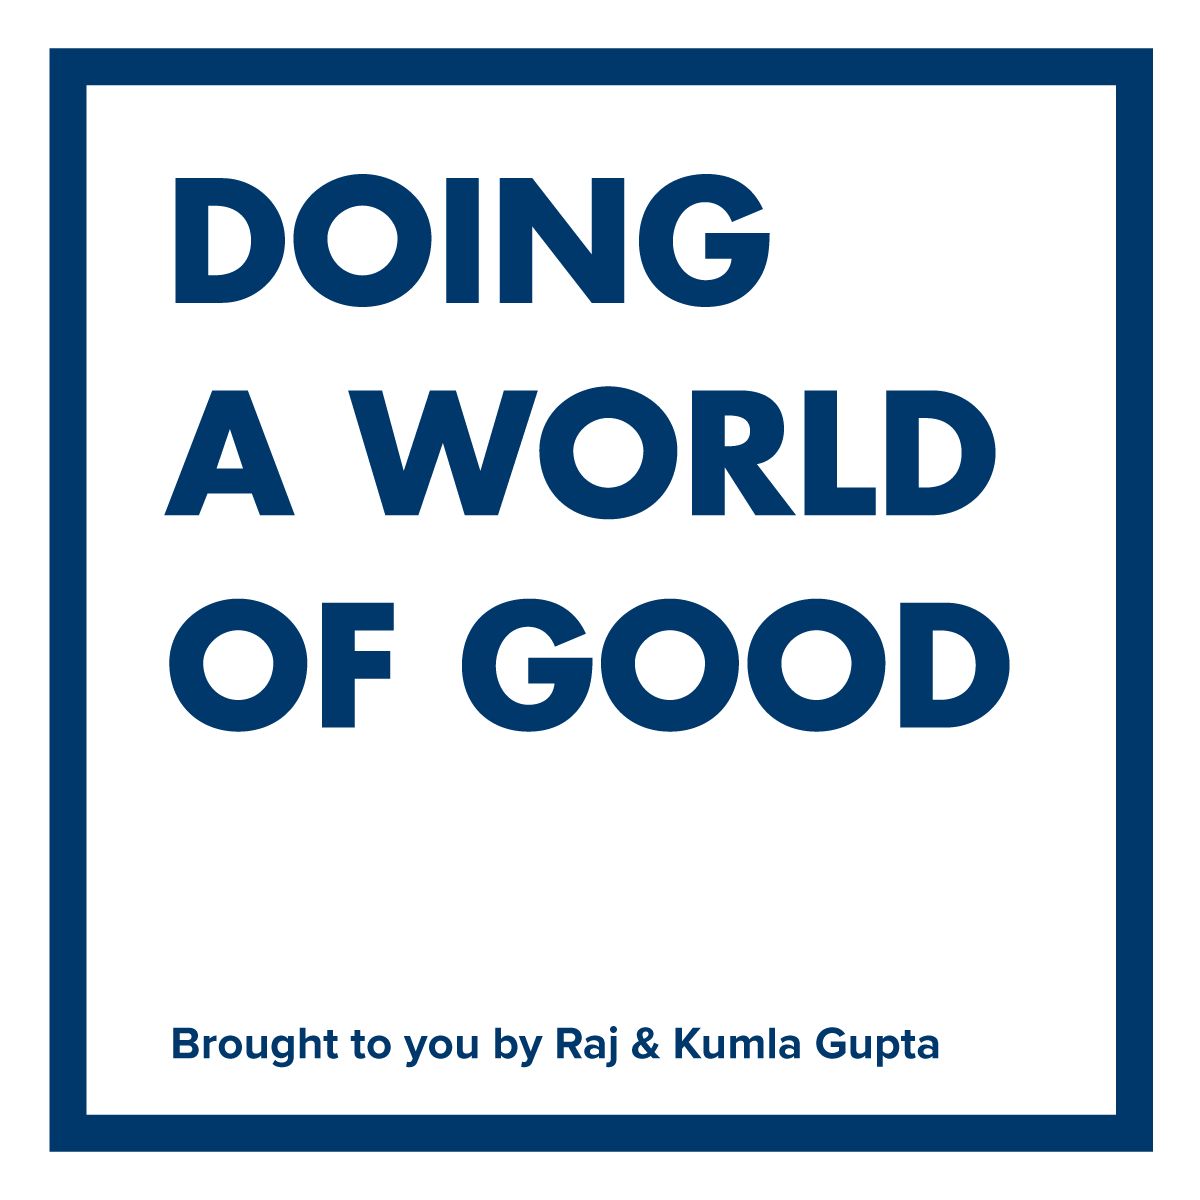 Do the world of good